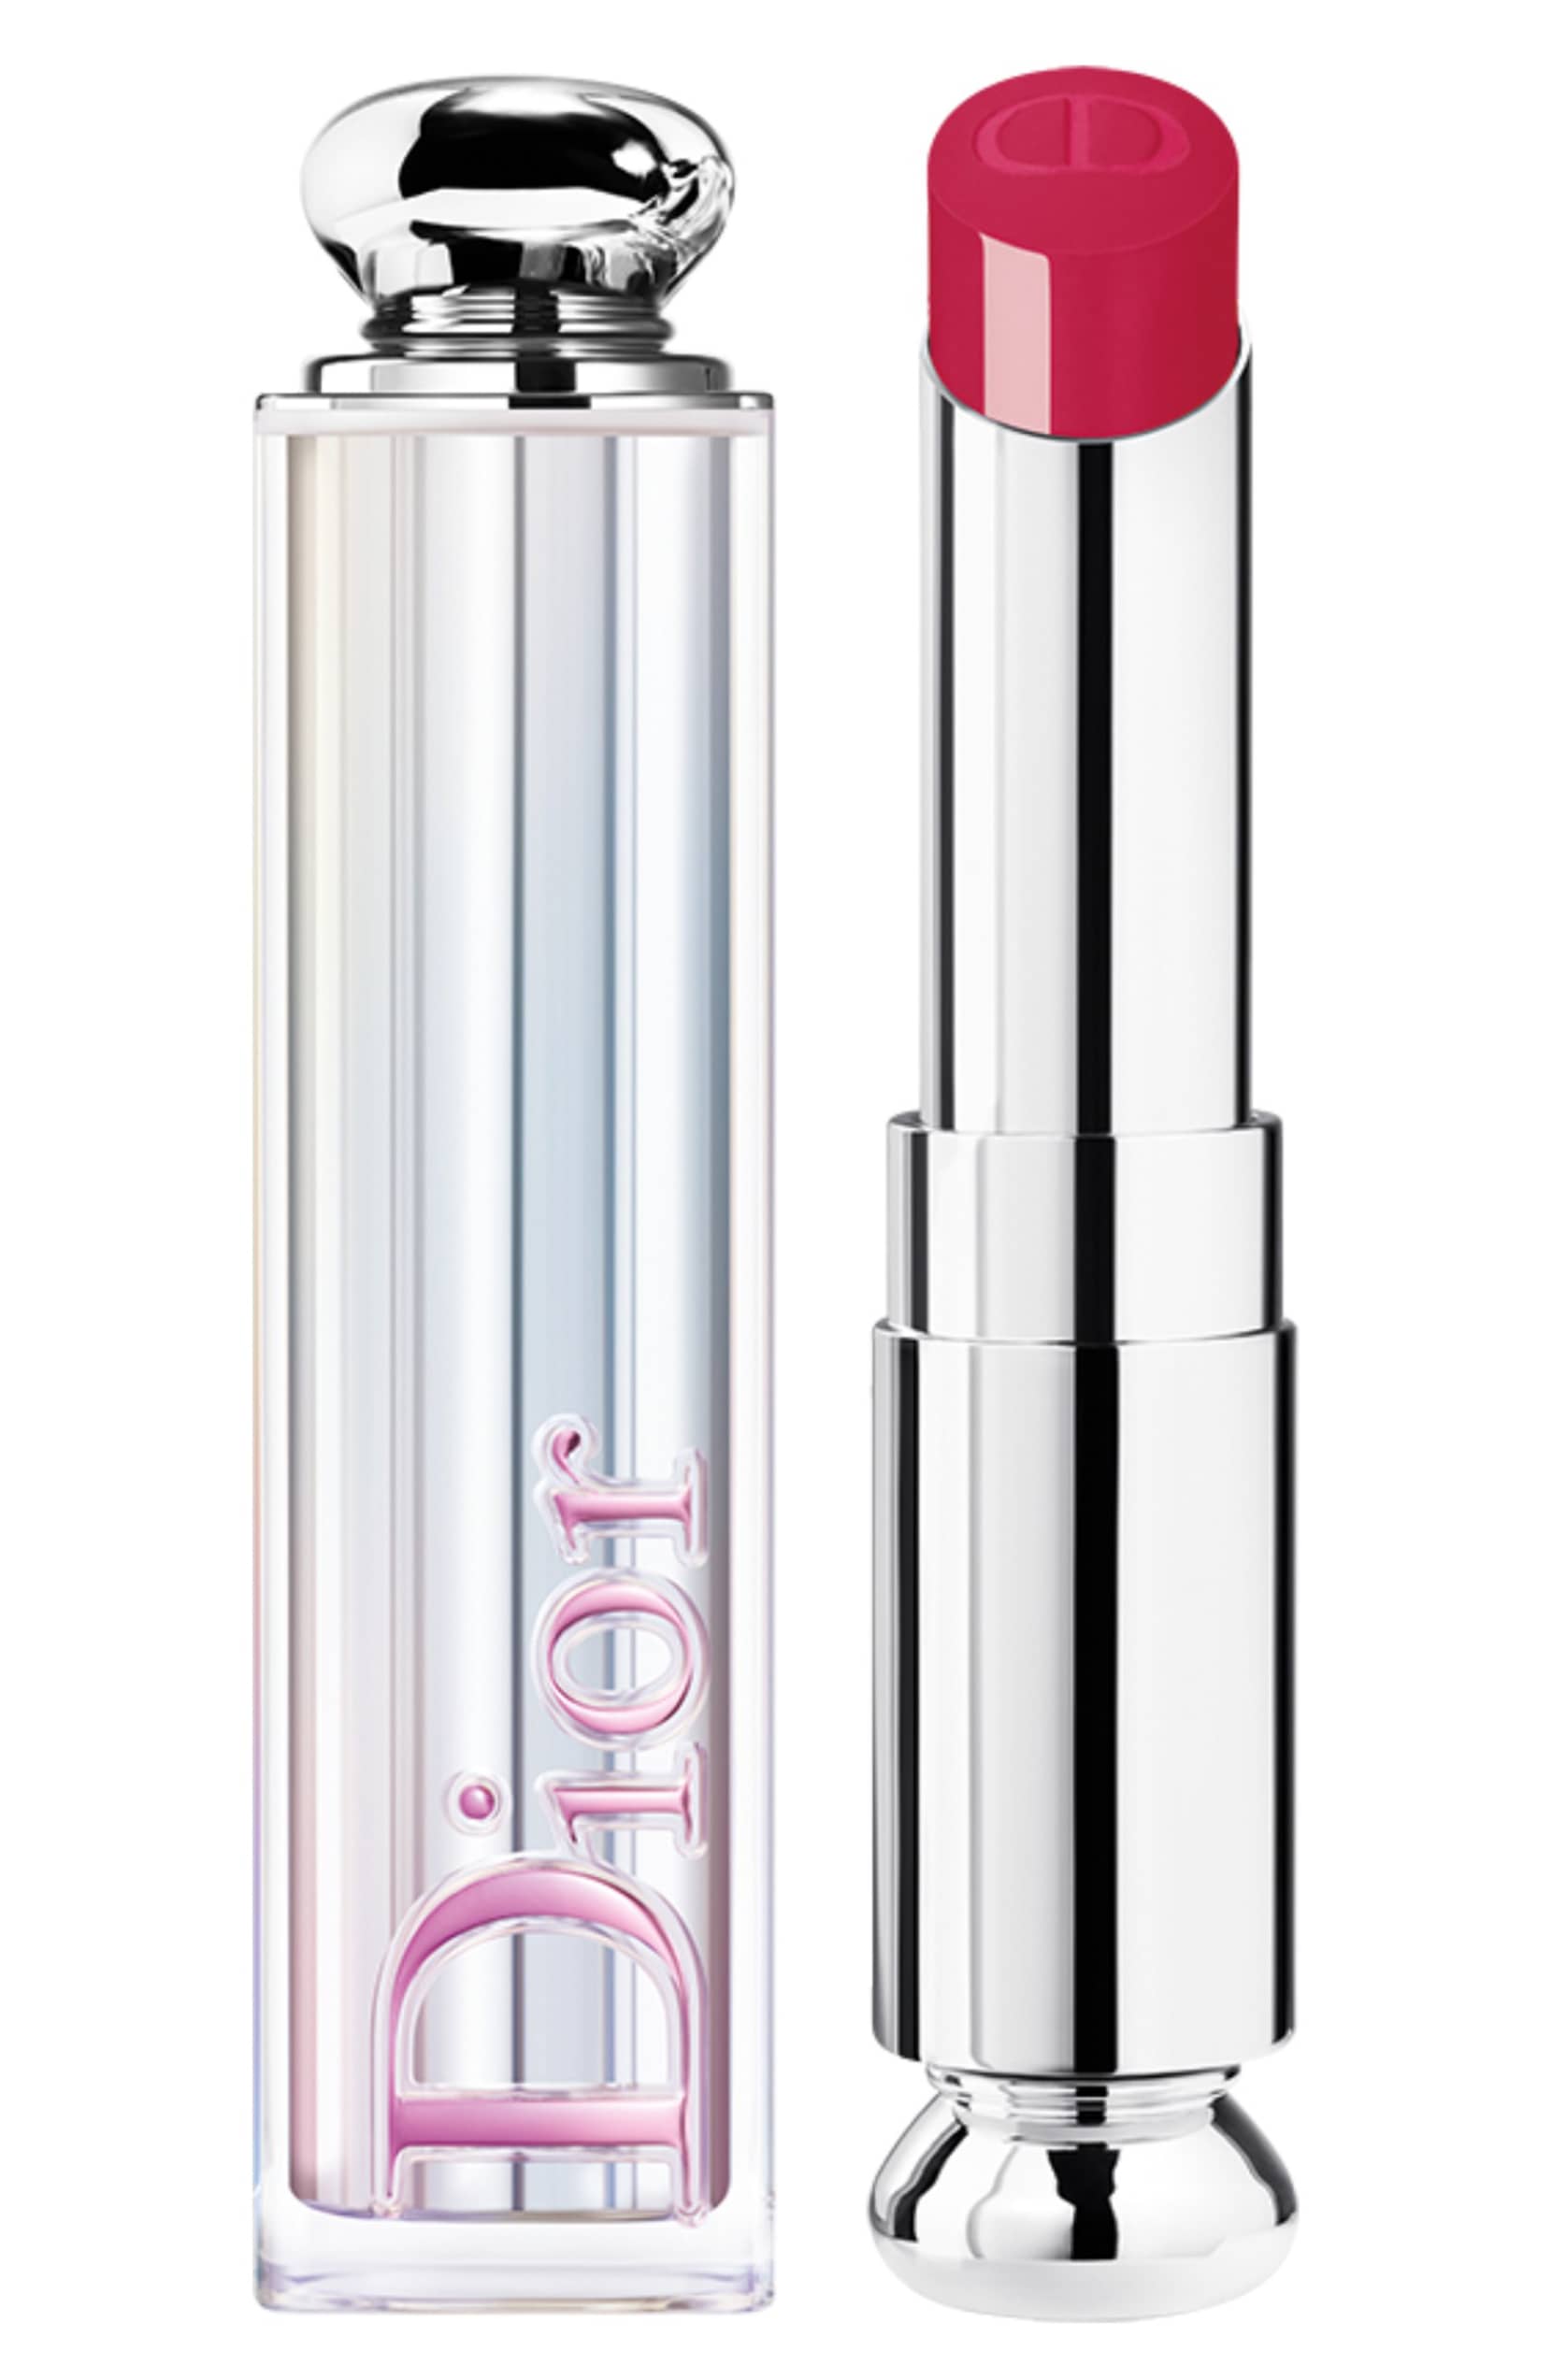 Dior Addict Stellar Shine Lipstick in 976 Be Dior $37